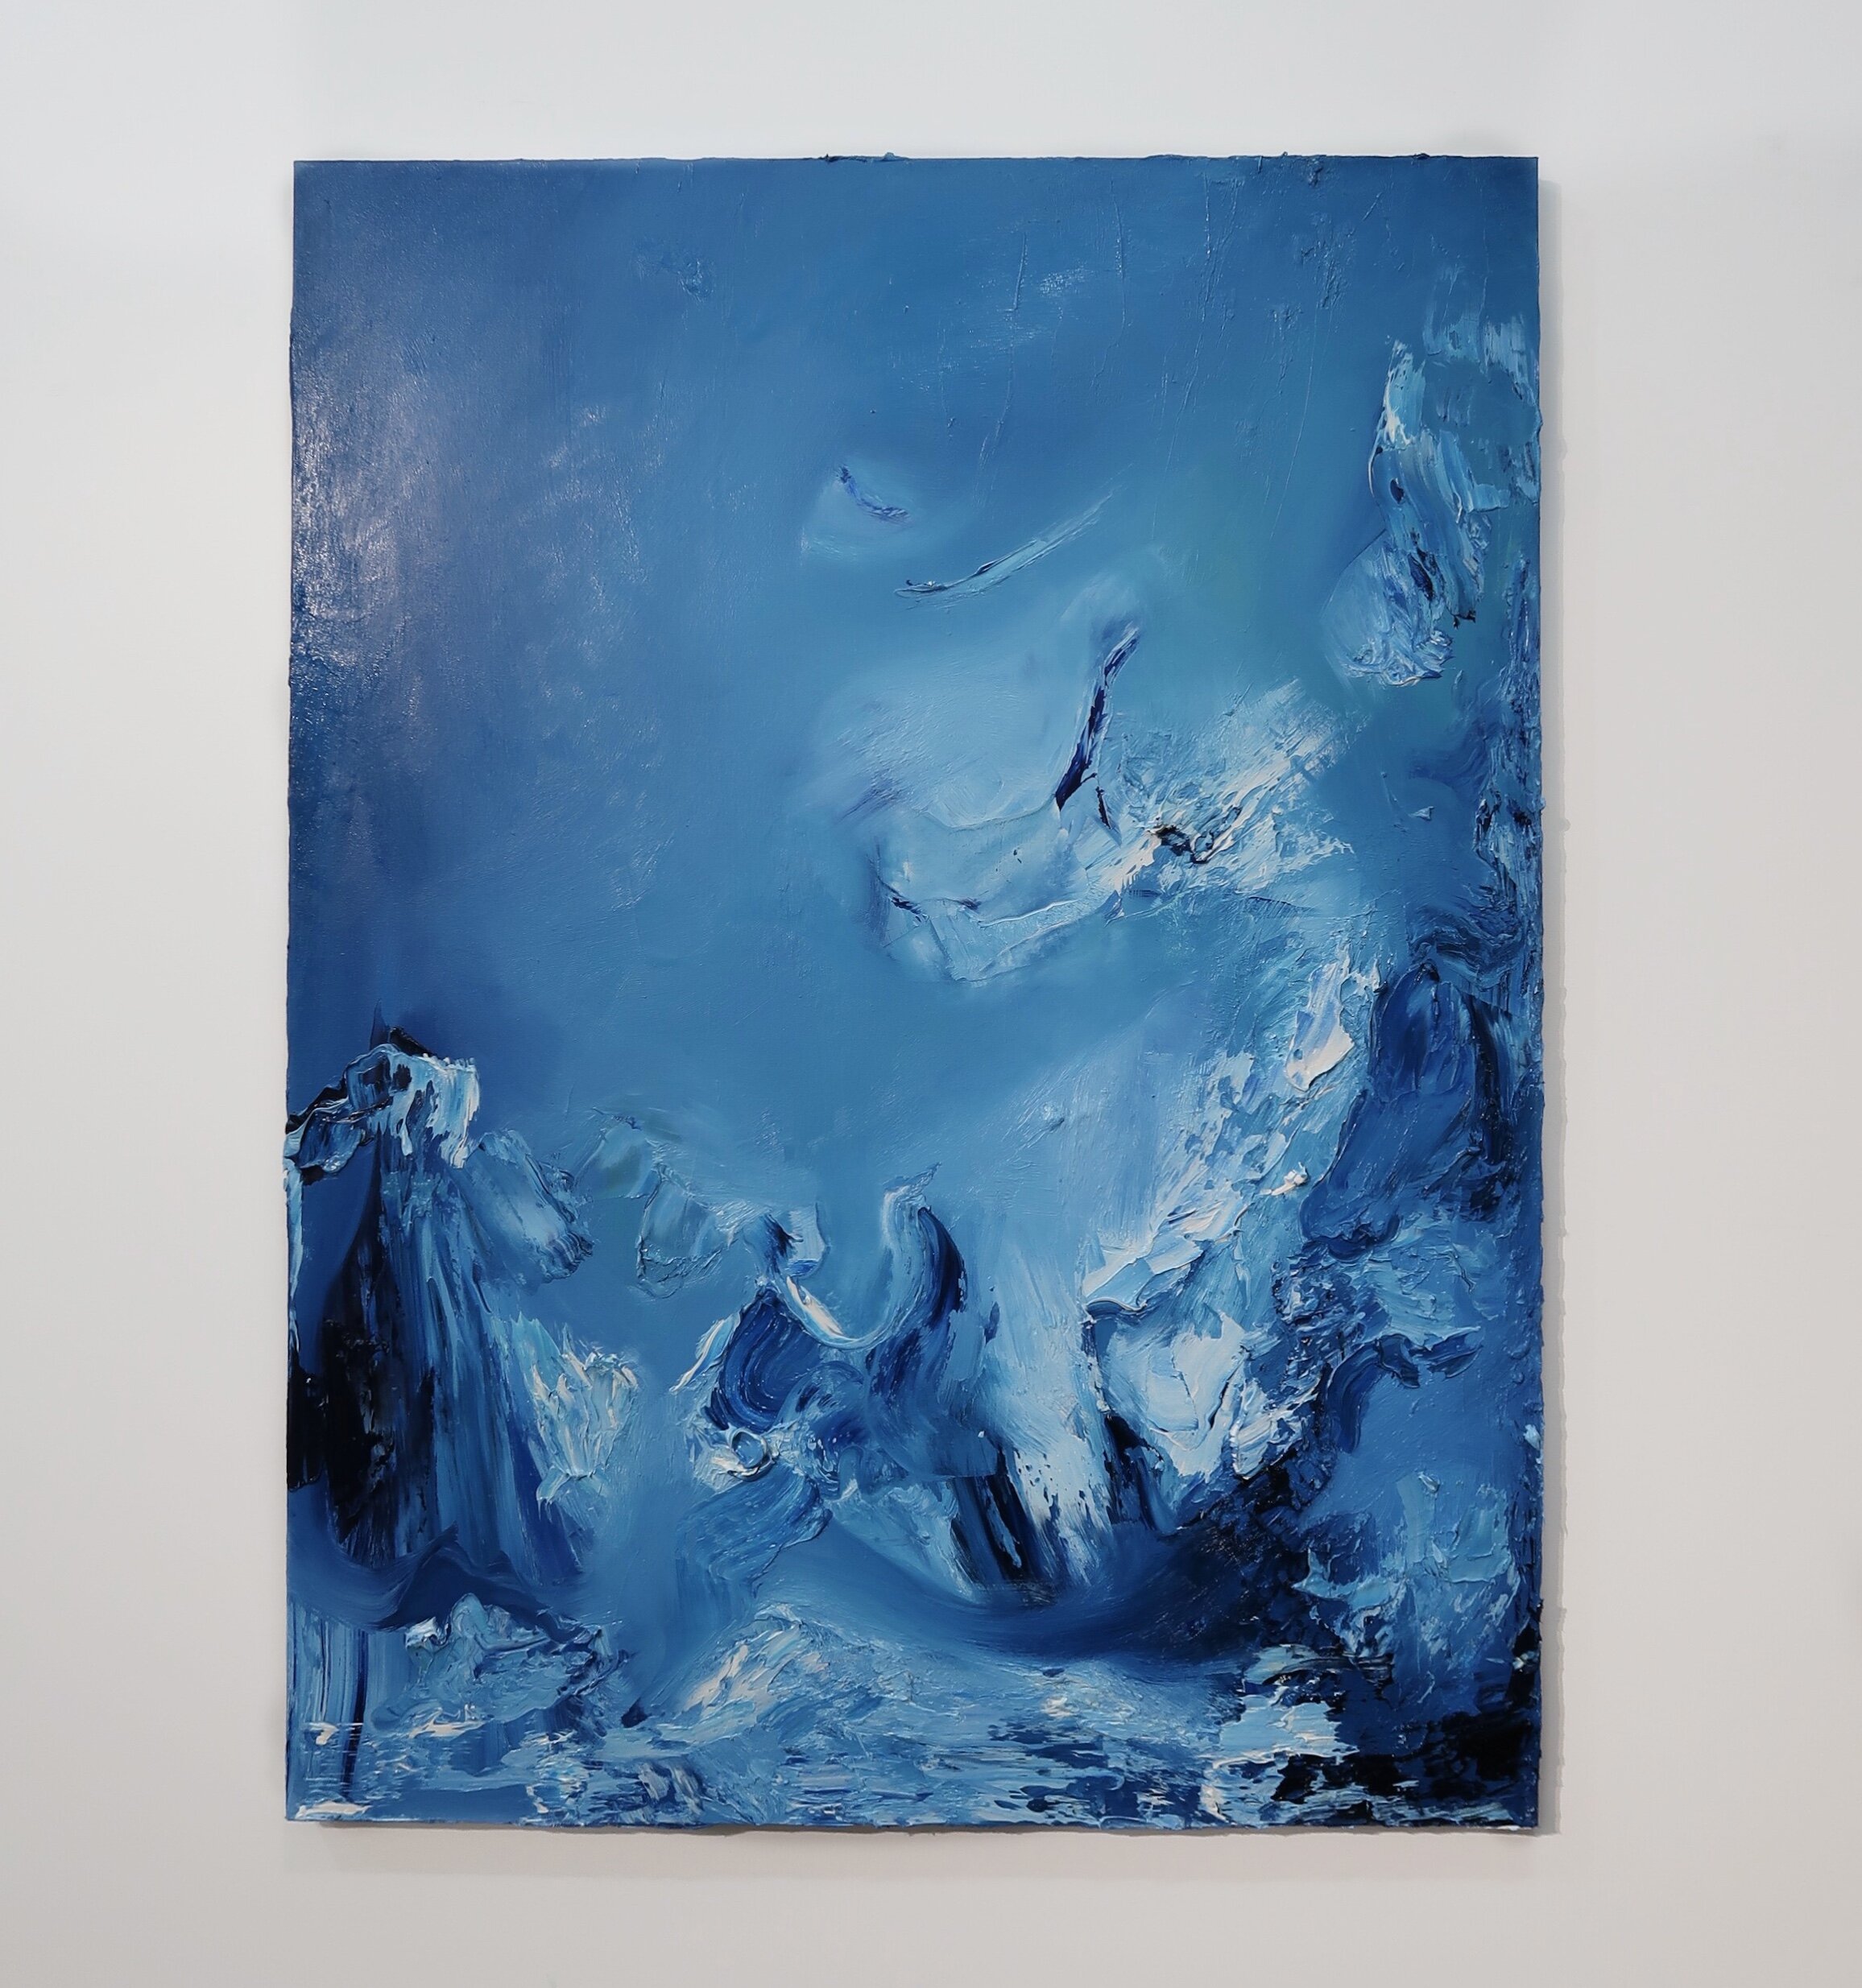  oil on canvas  36x48”  2020 